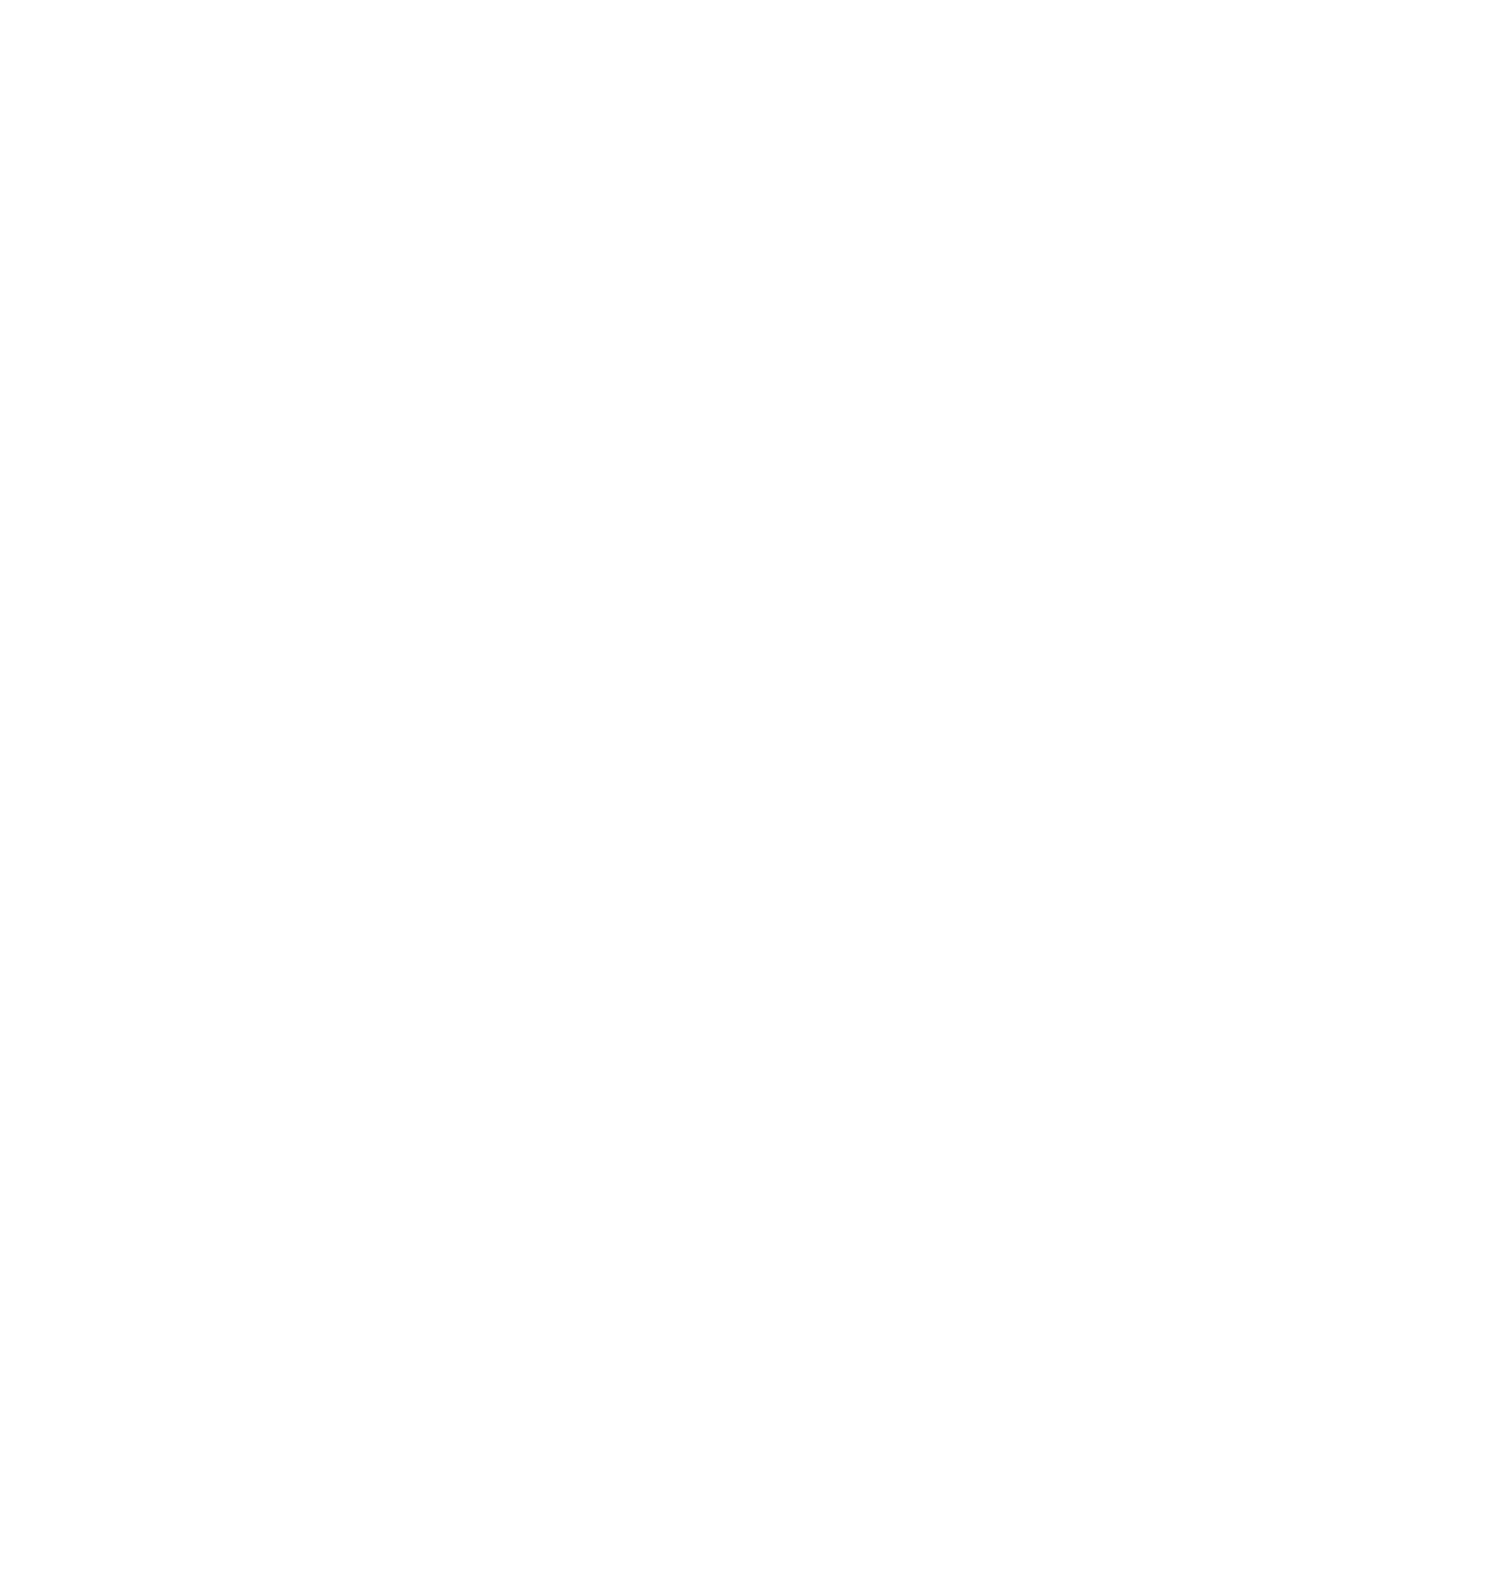 Profire Energy logo for dark backgrounds (transparent PNG)